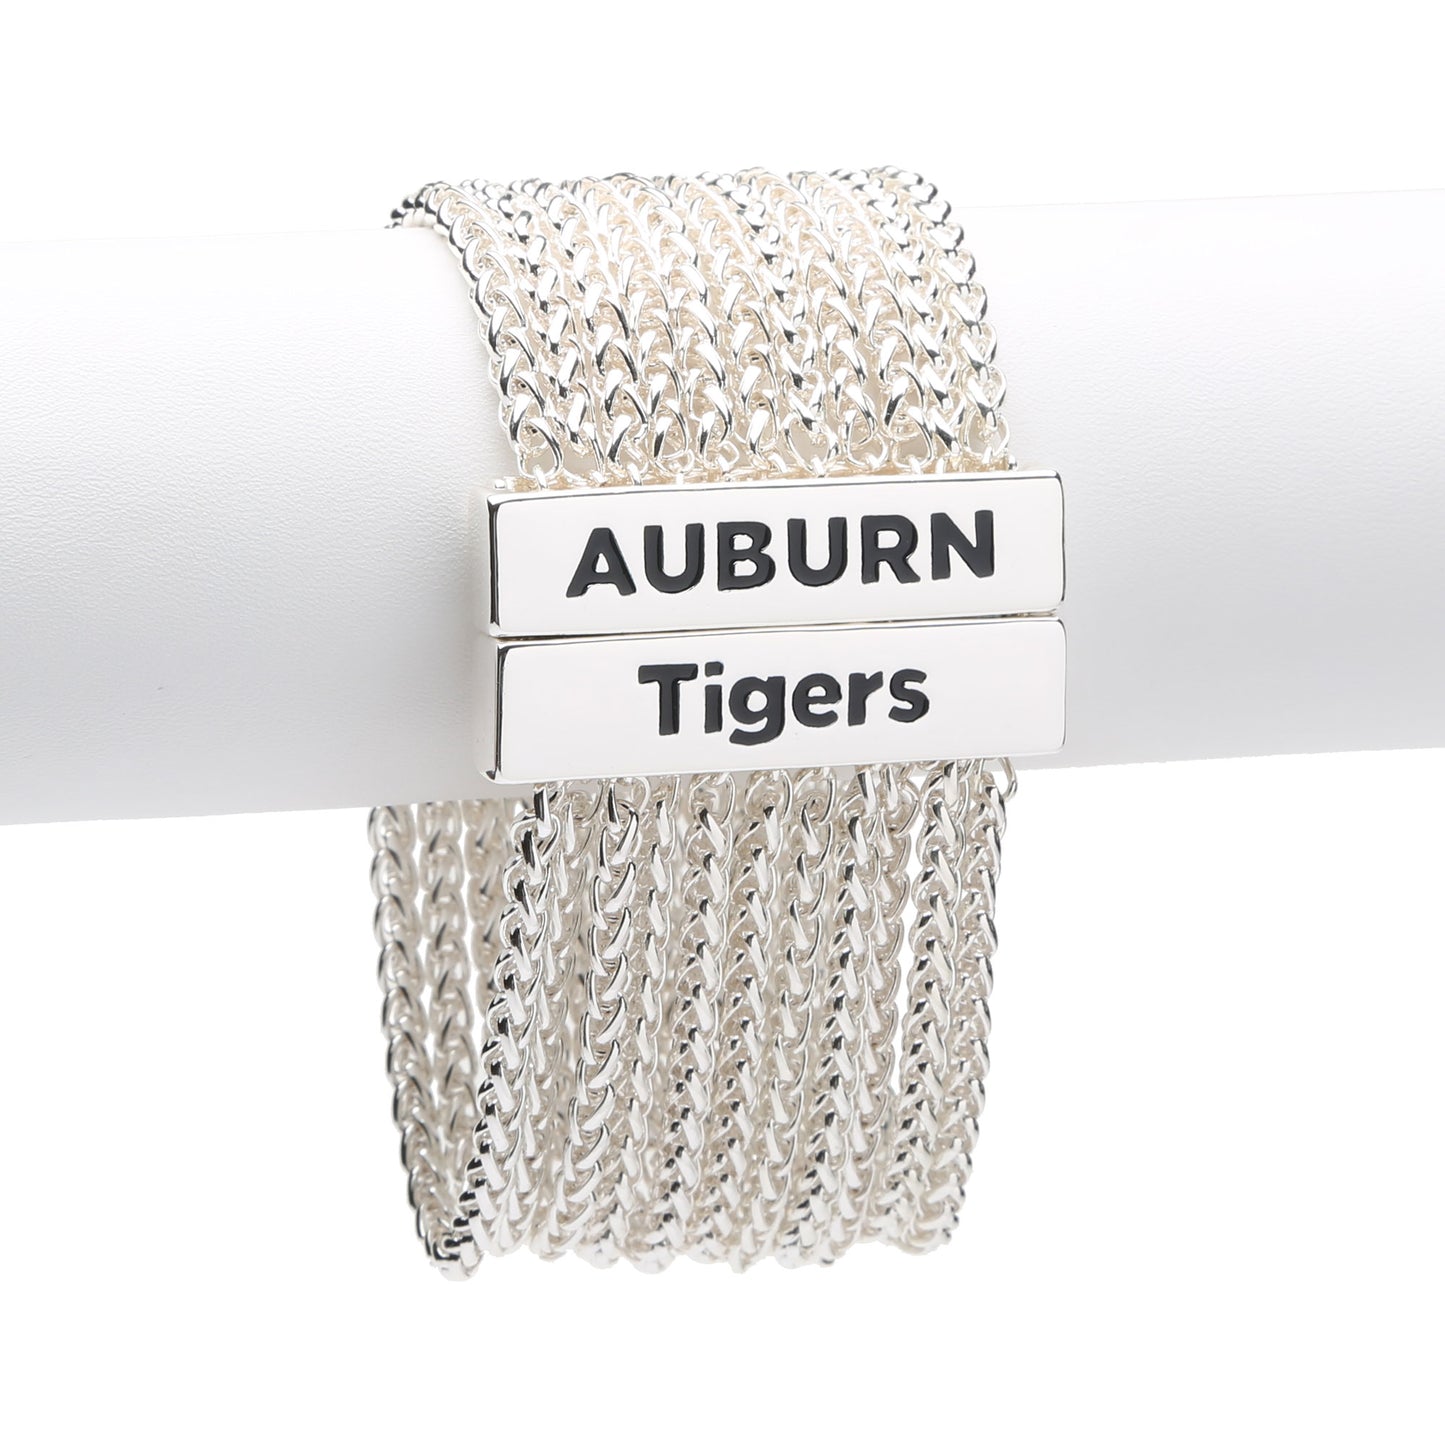 Auburn Tigers Jolie Bracelet